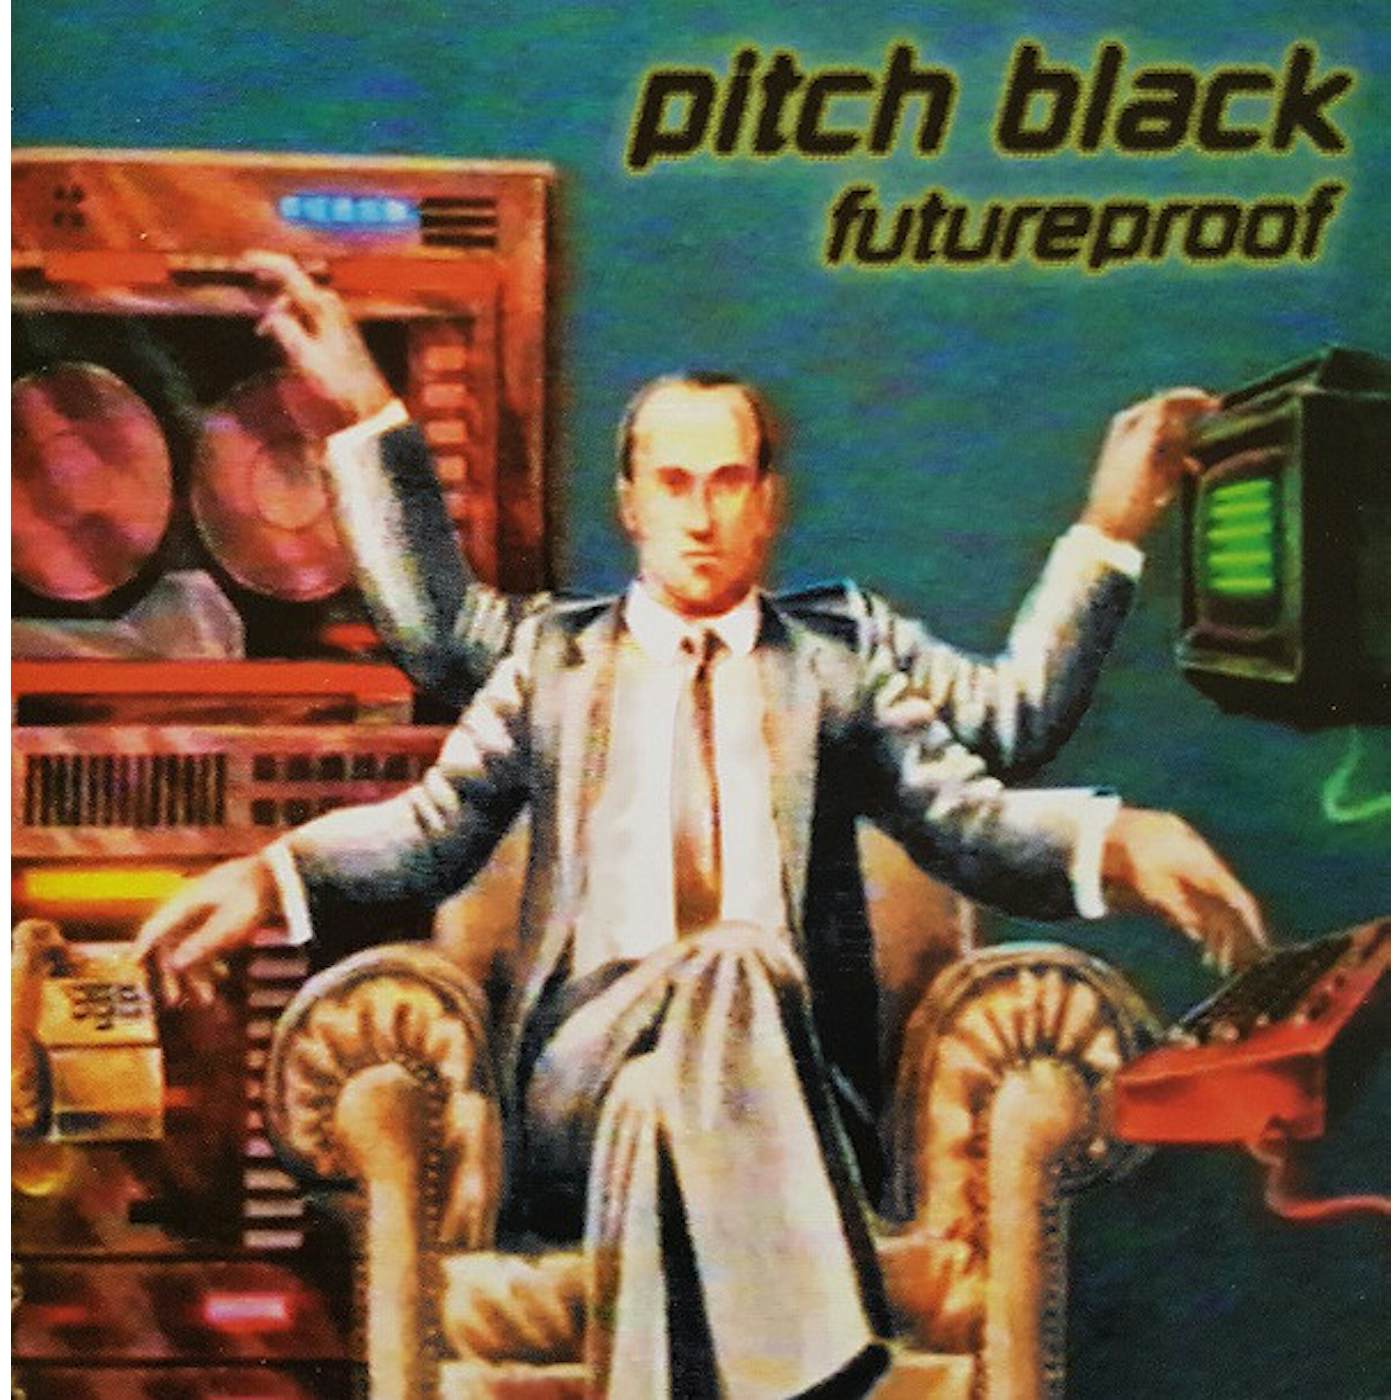 Pitch Black Futureproof Vinyl Record